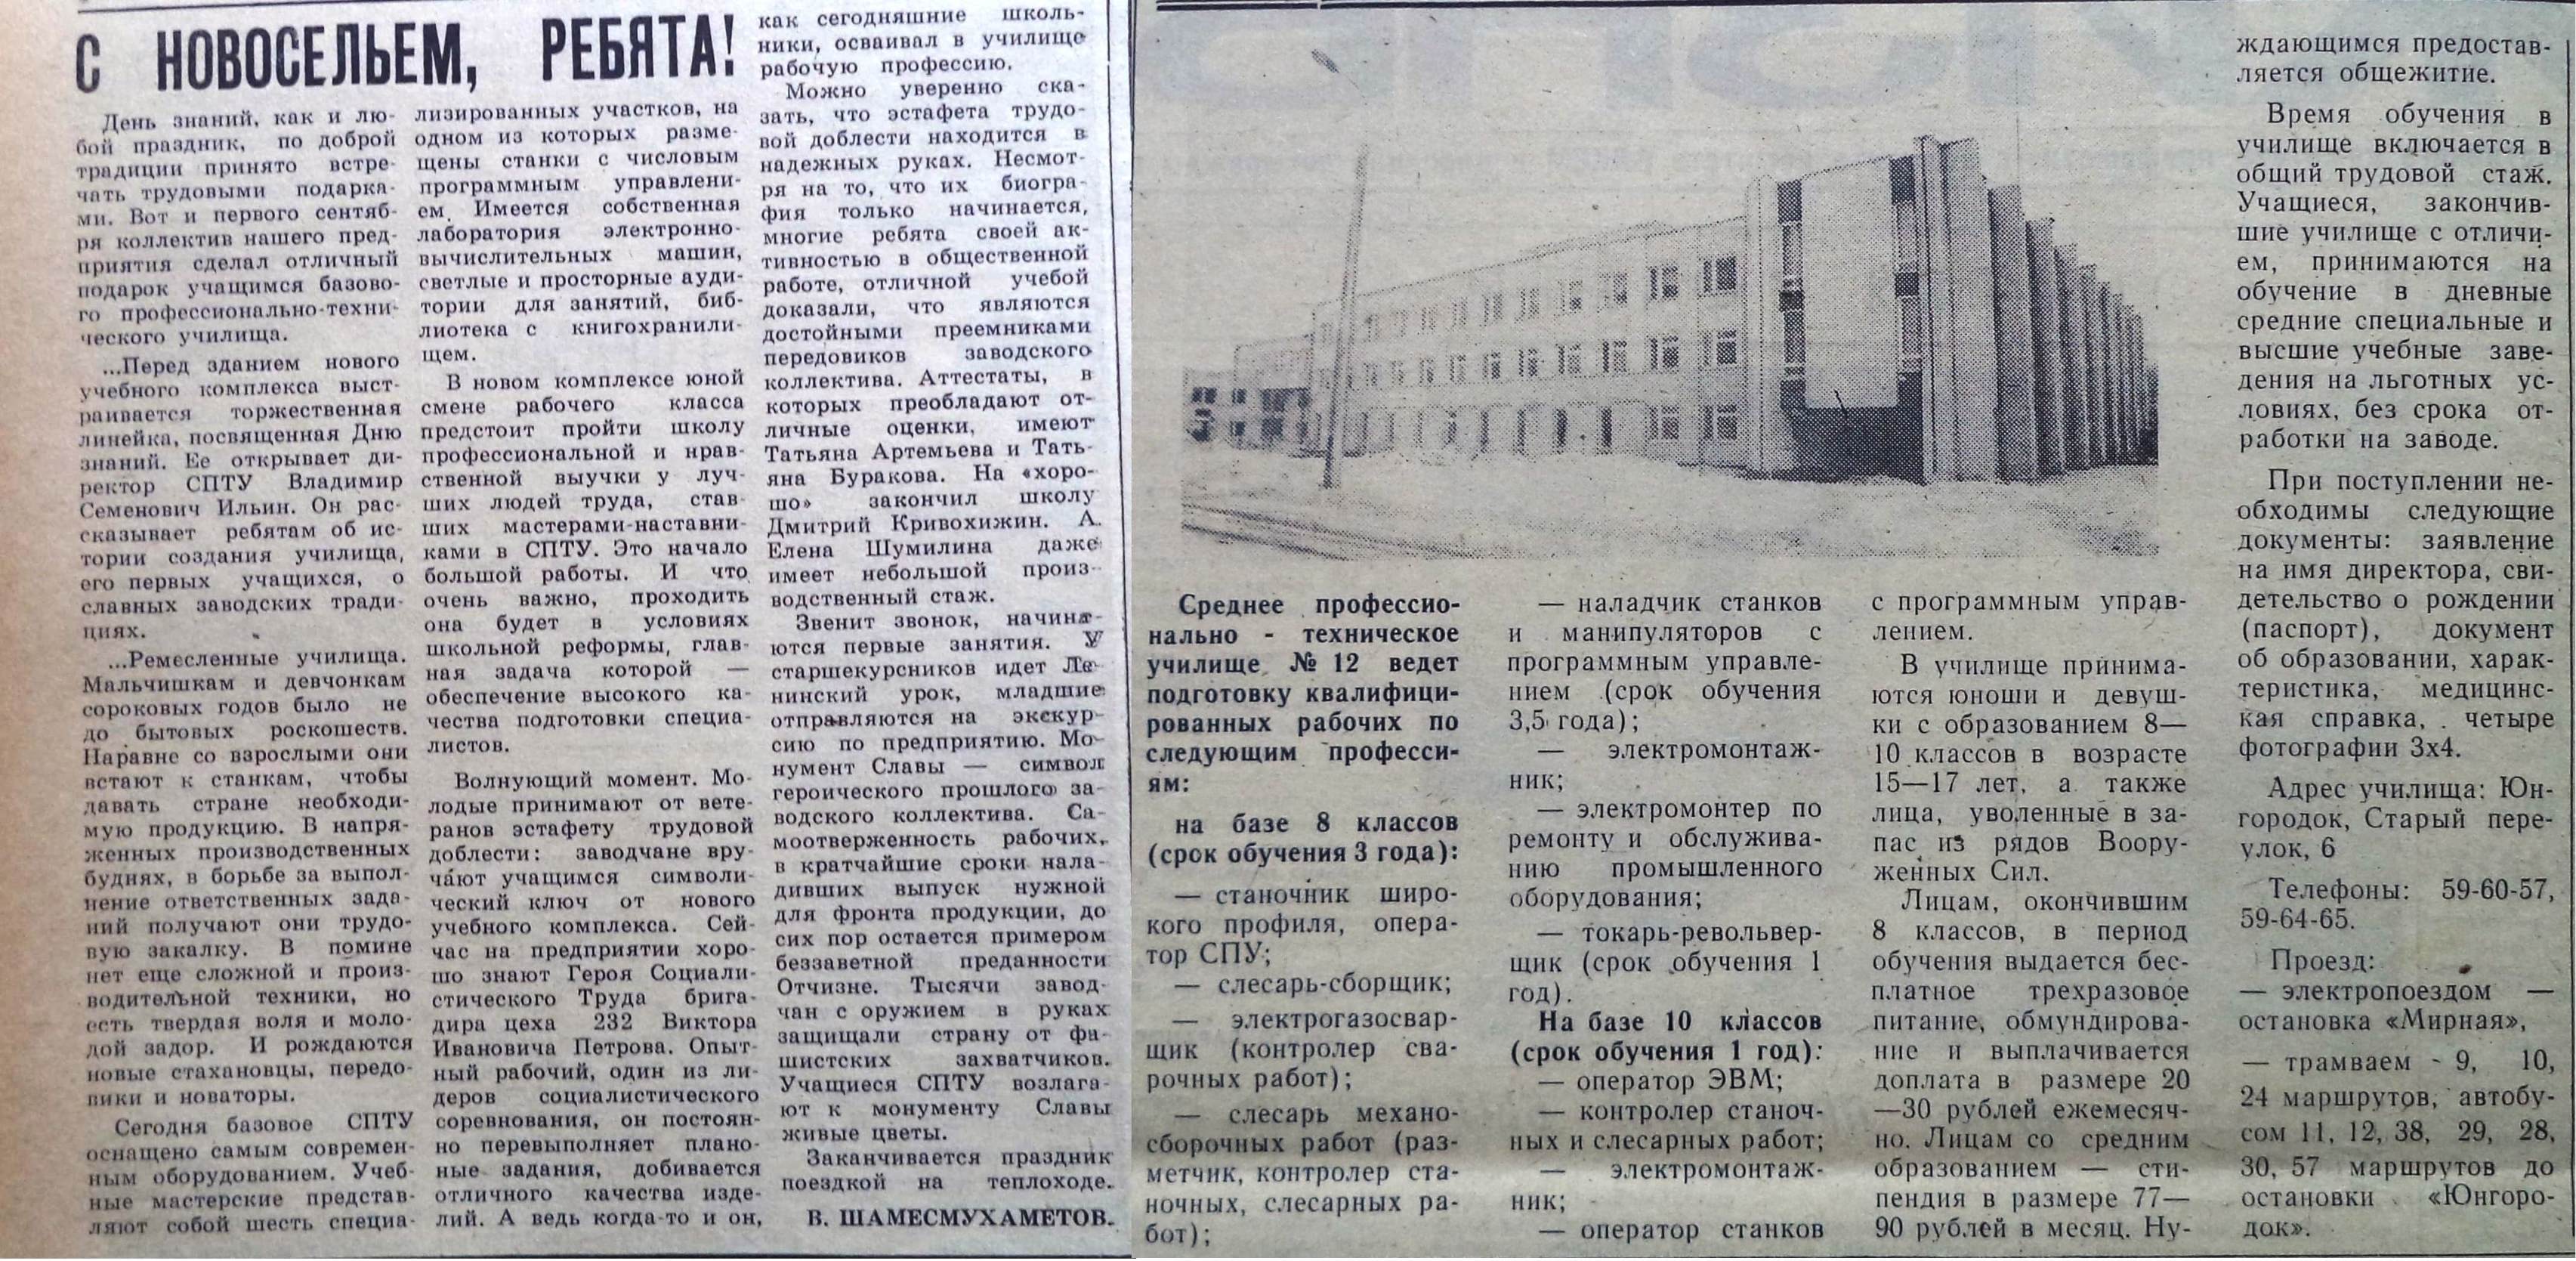 Стар-Стац-ФОТО-58-Заводская жизнь-1986-5 сентября-min-min